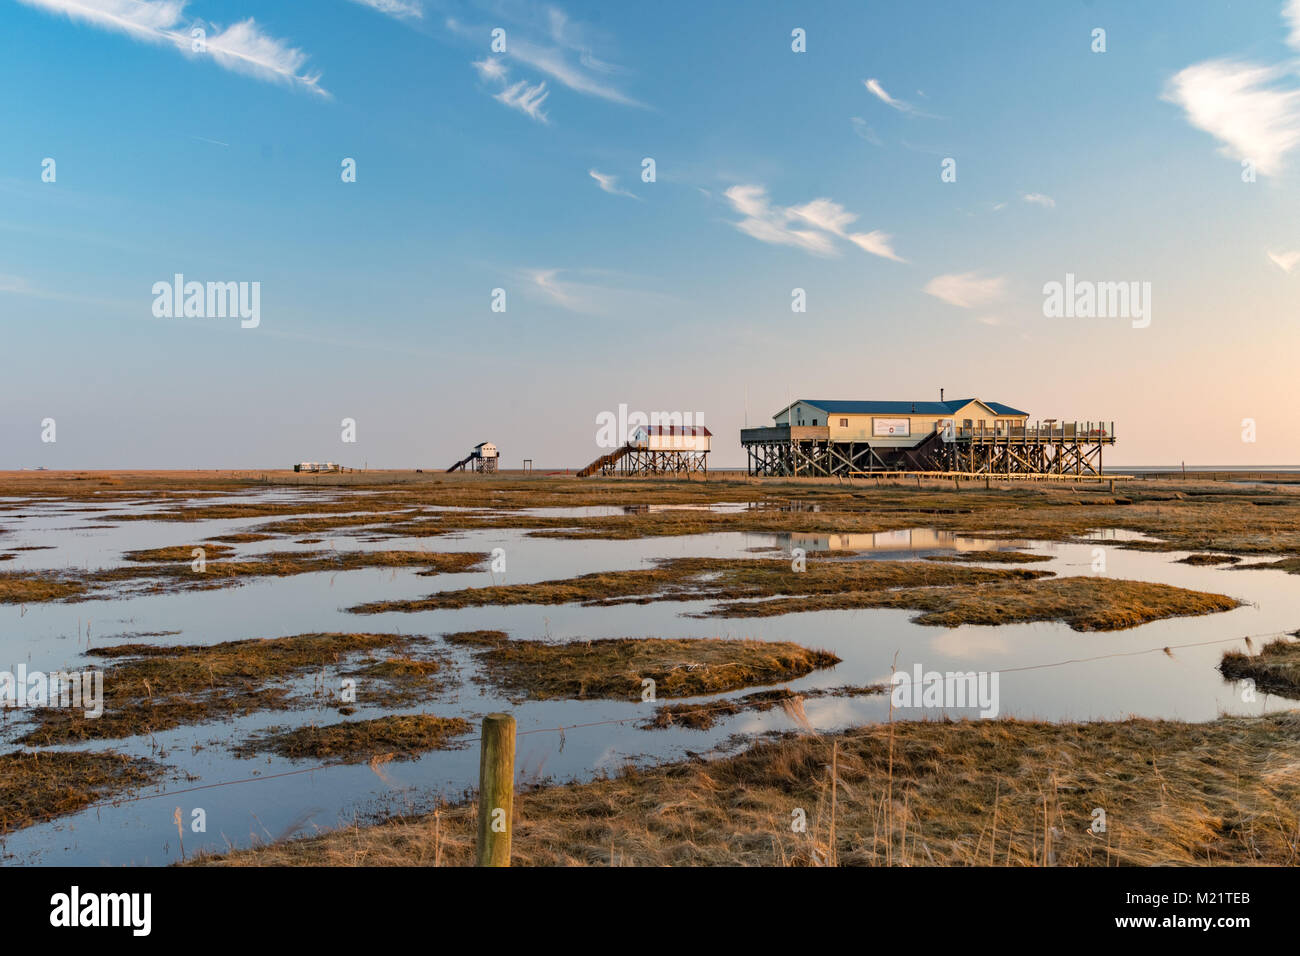 Die berühmten Pfahlbauten im Wattenmeer von Sankt Peter-Ording. Stock Photo